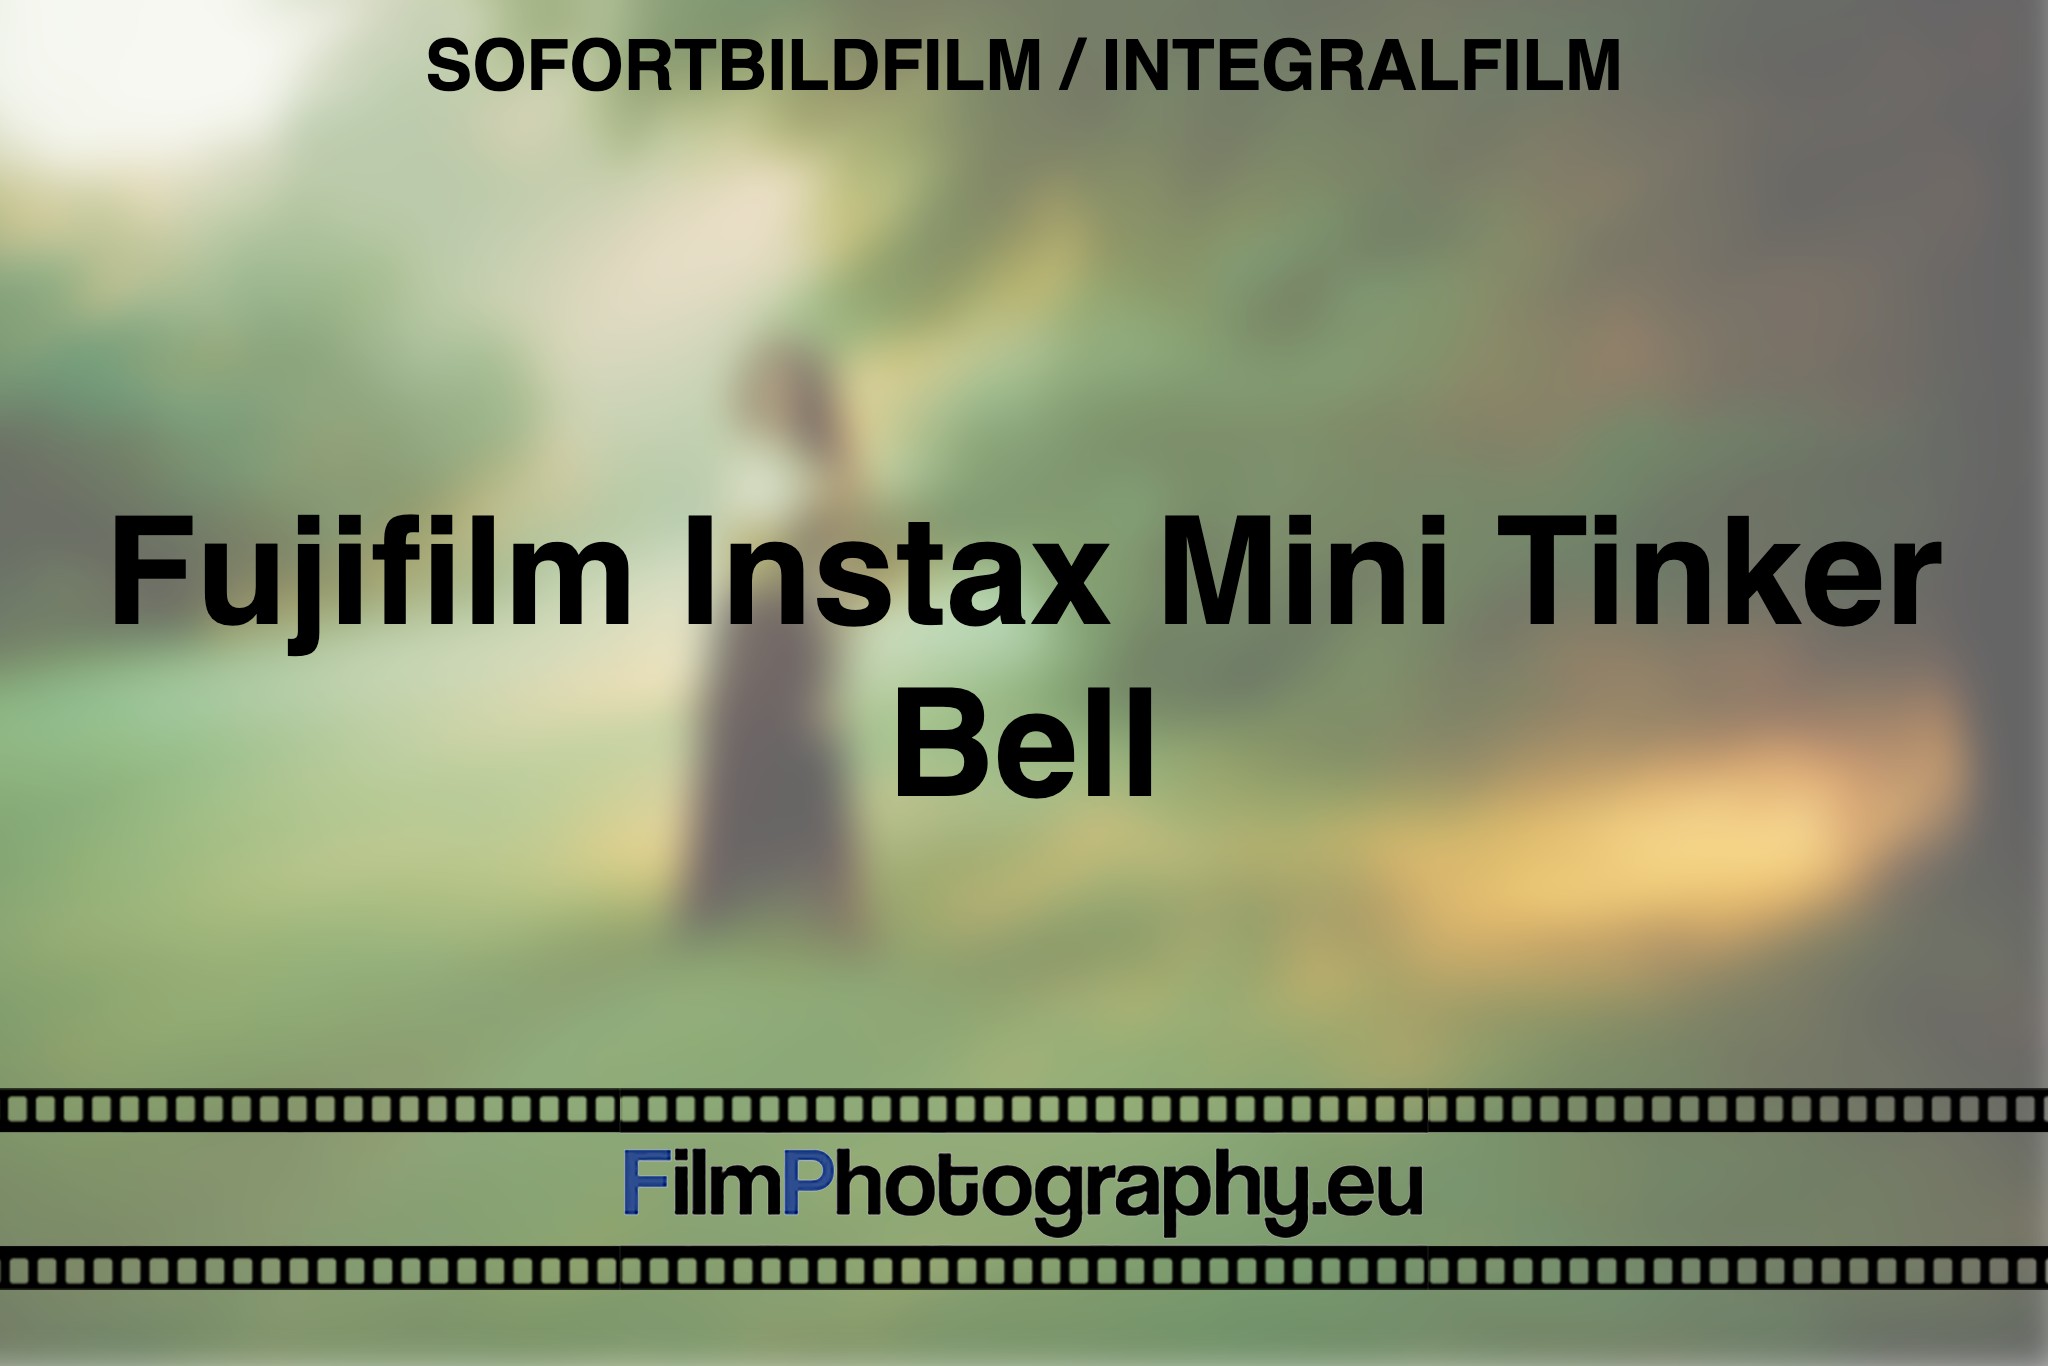 fujifilm-instax-mini-tinker-bell-sofortbildfilm-integralfilm-fp-bnv